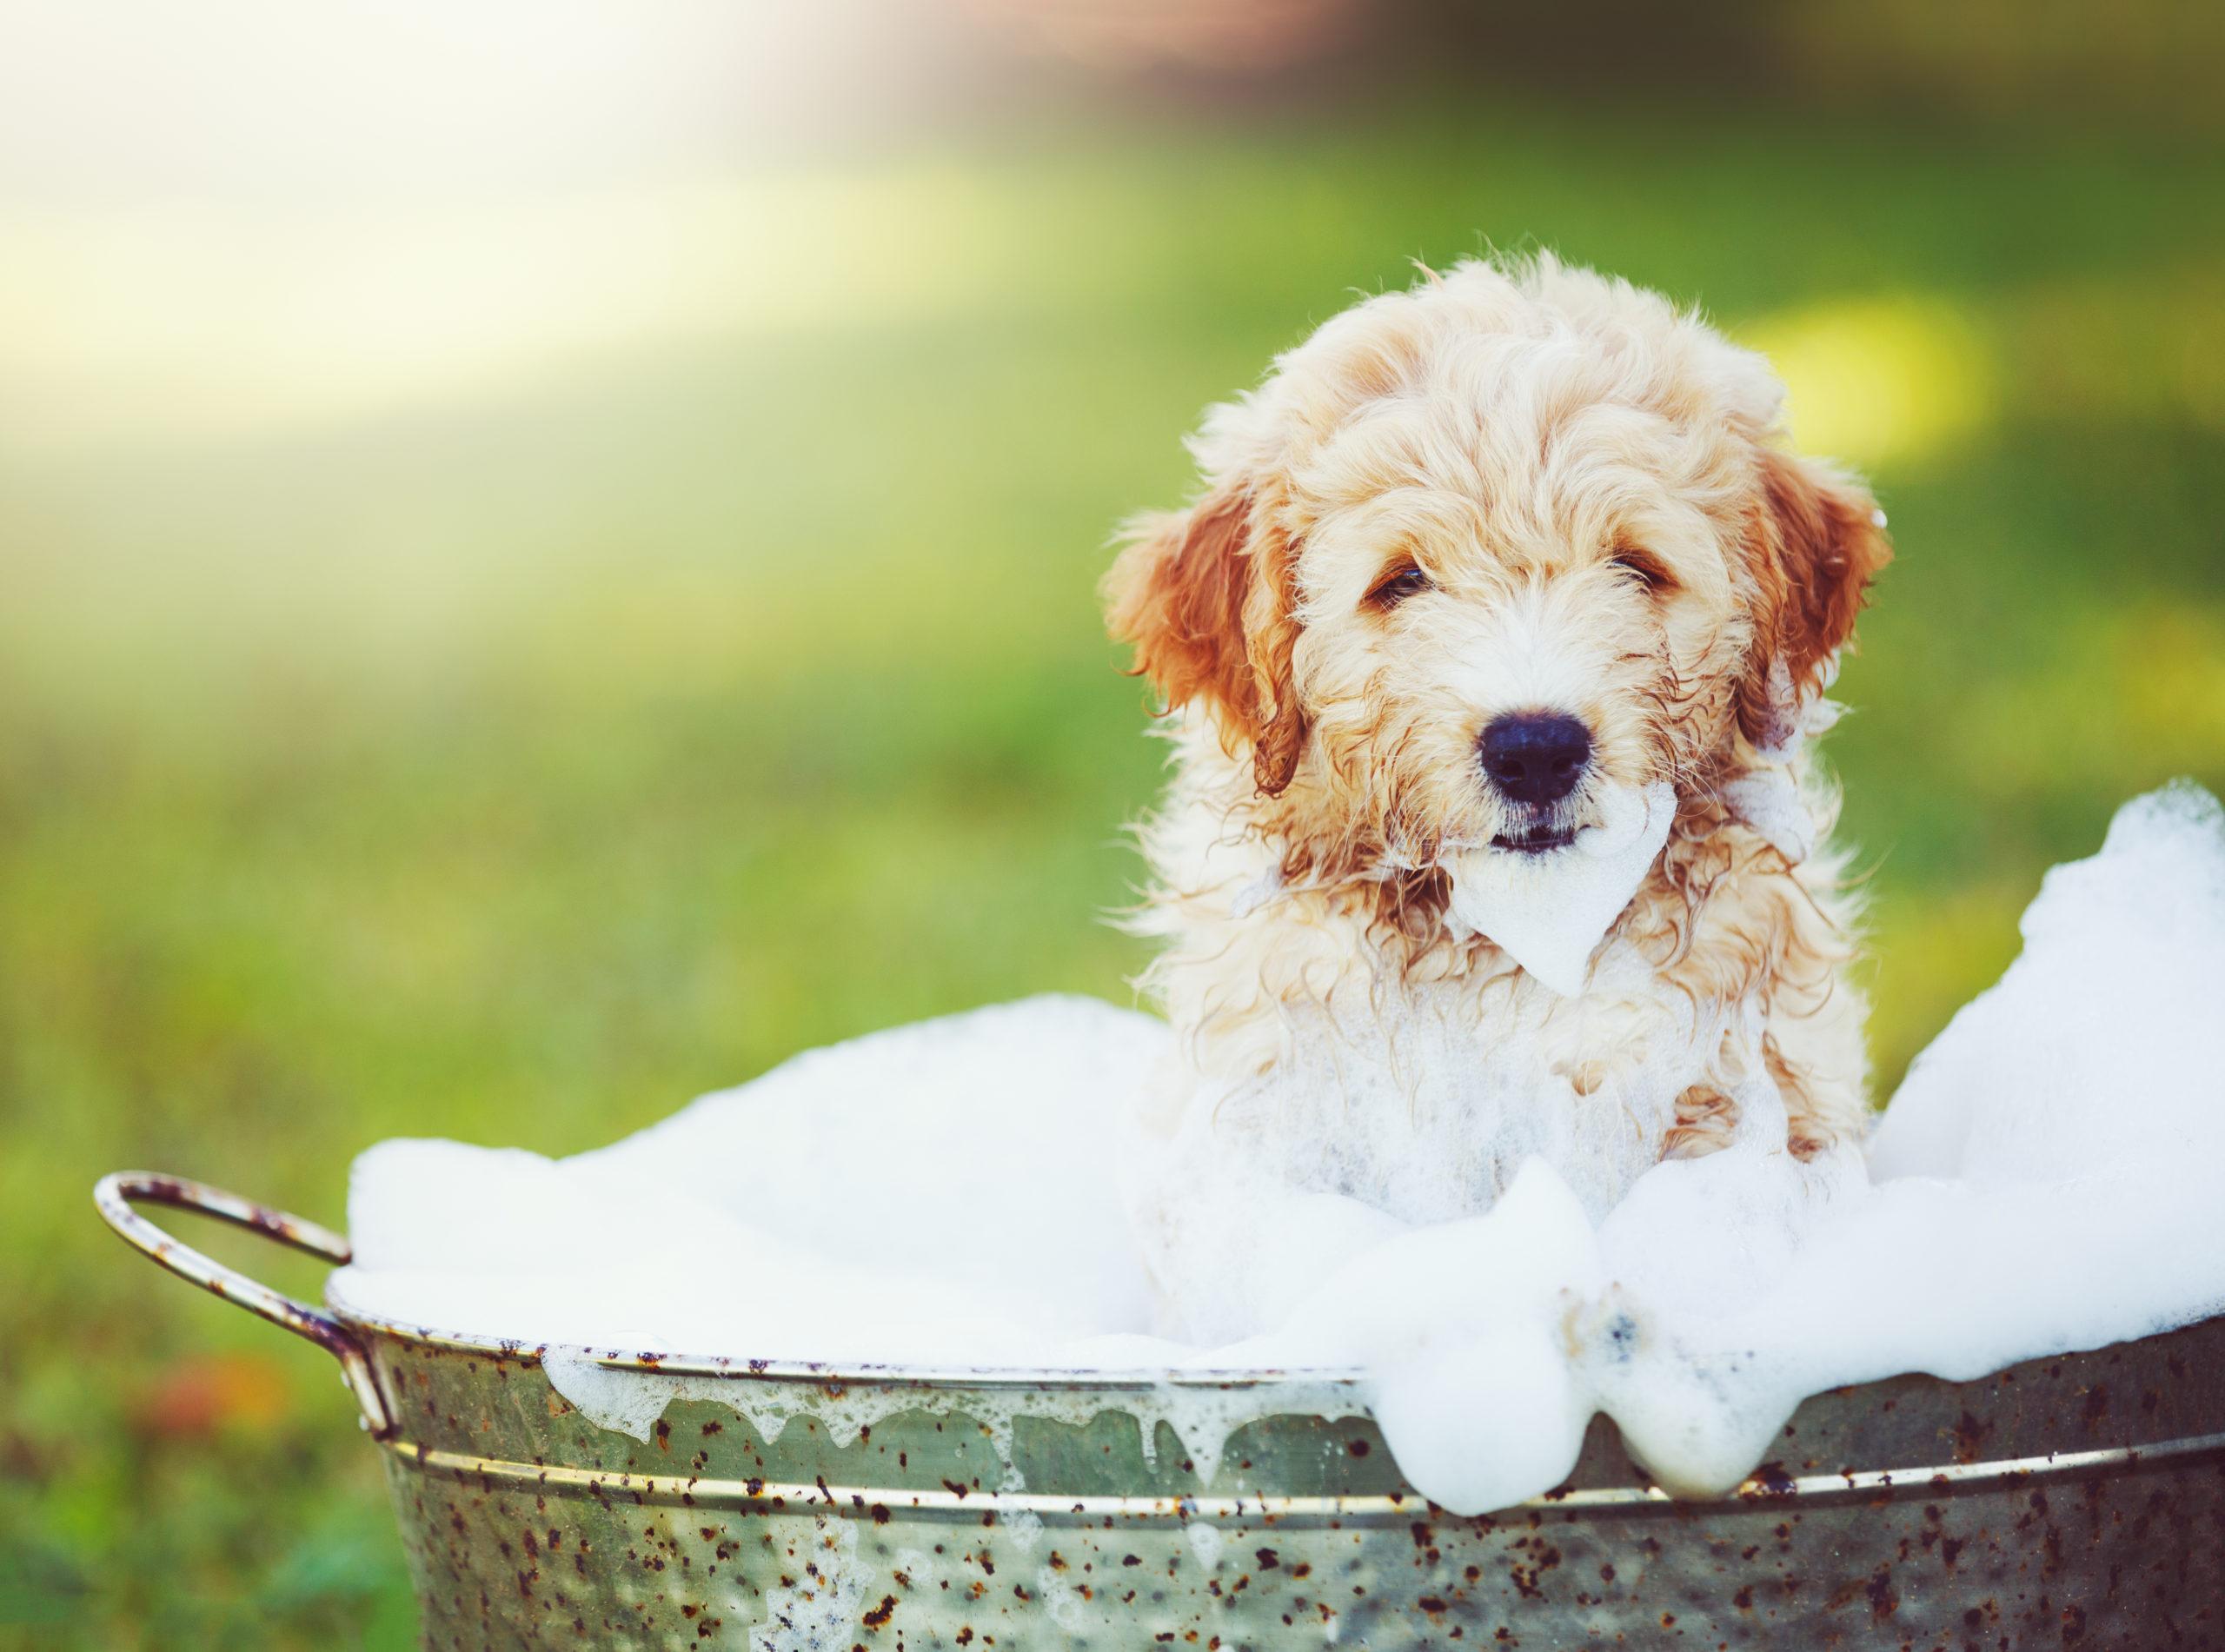 Adorable Cute Puppy. Golden Retriever Puppy taking a Bubble Bath